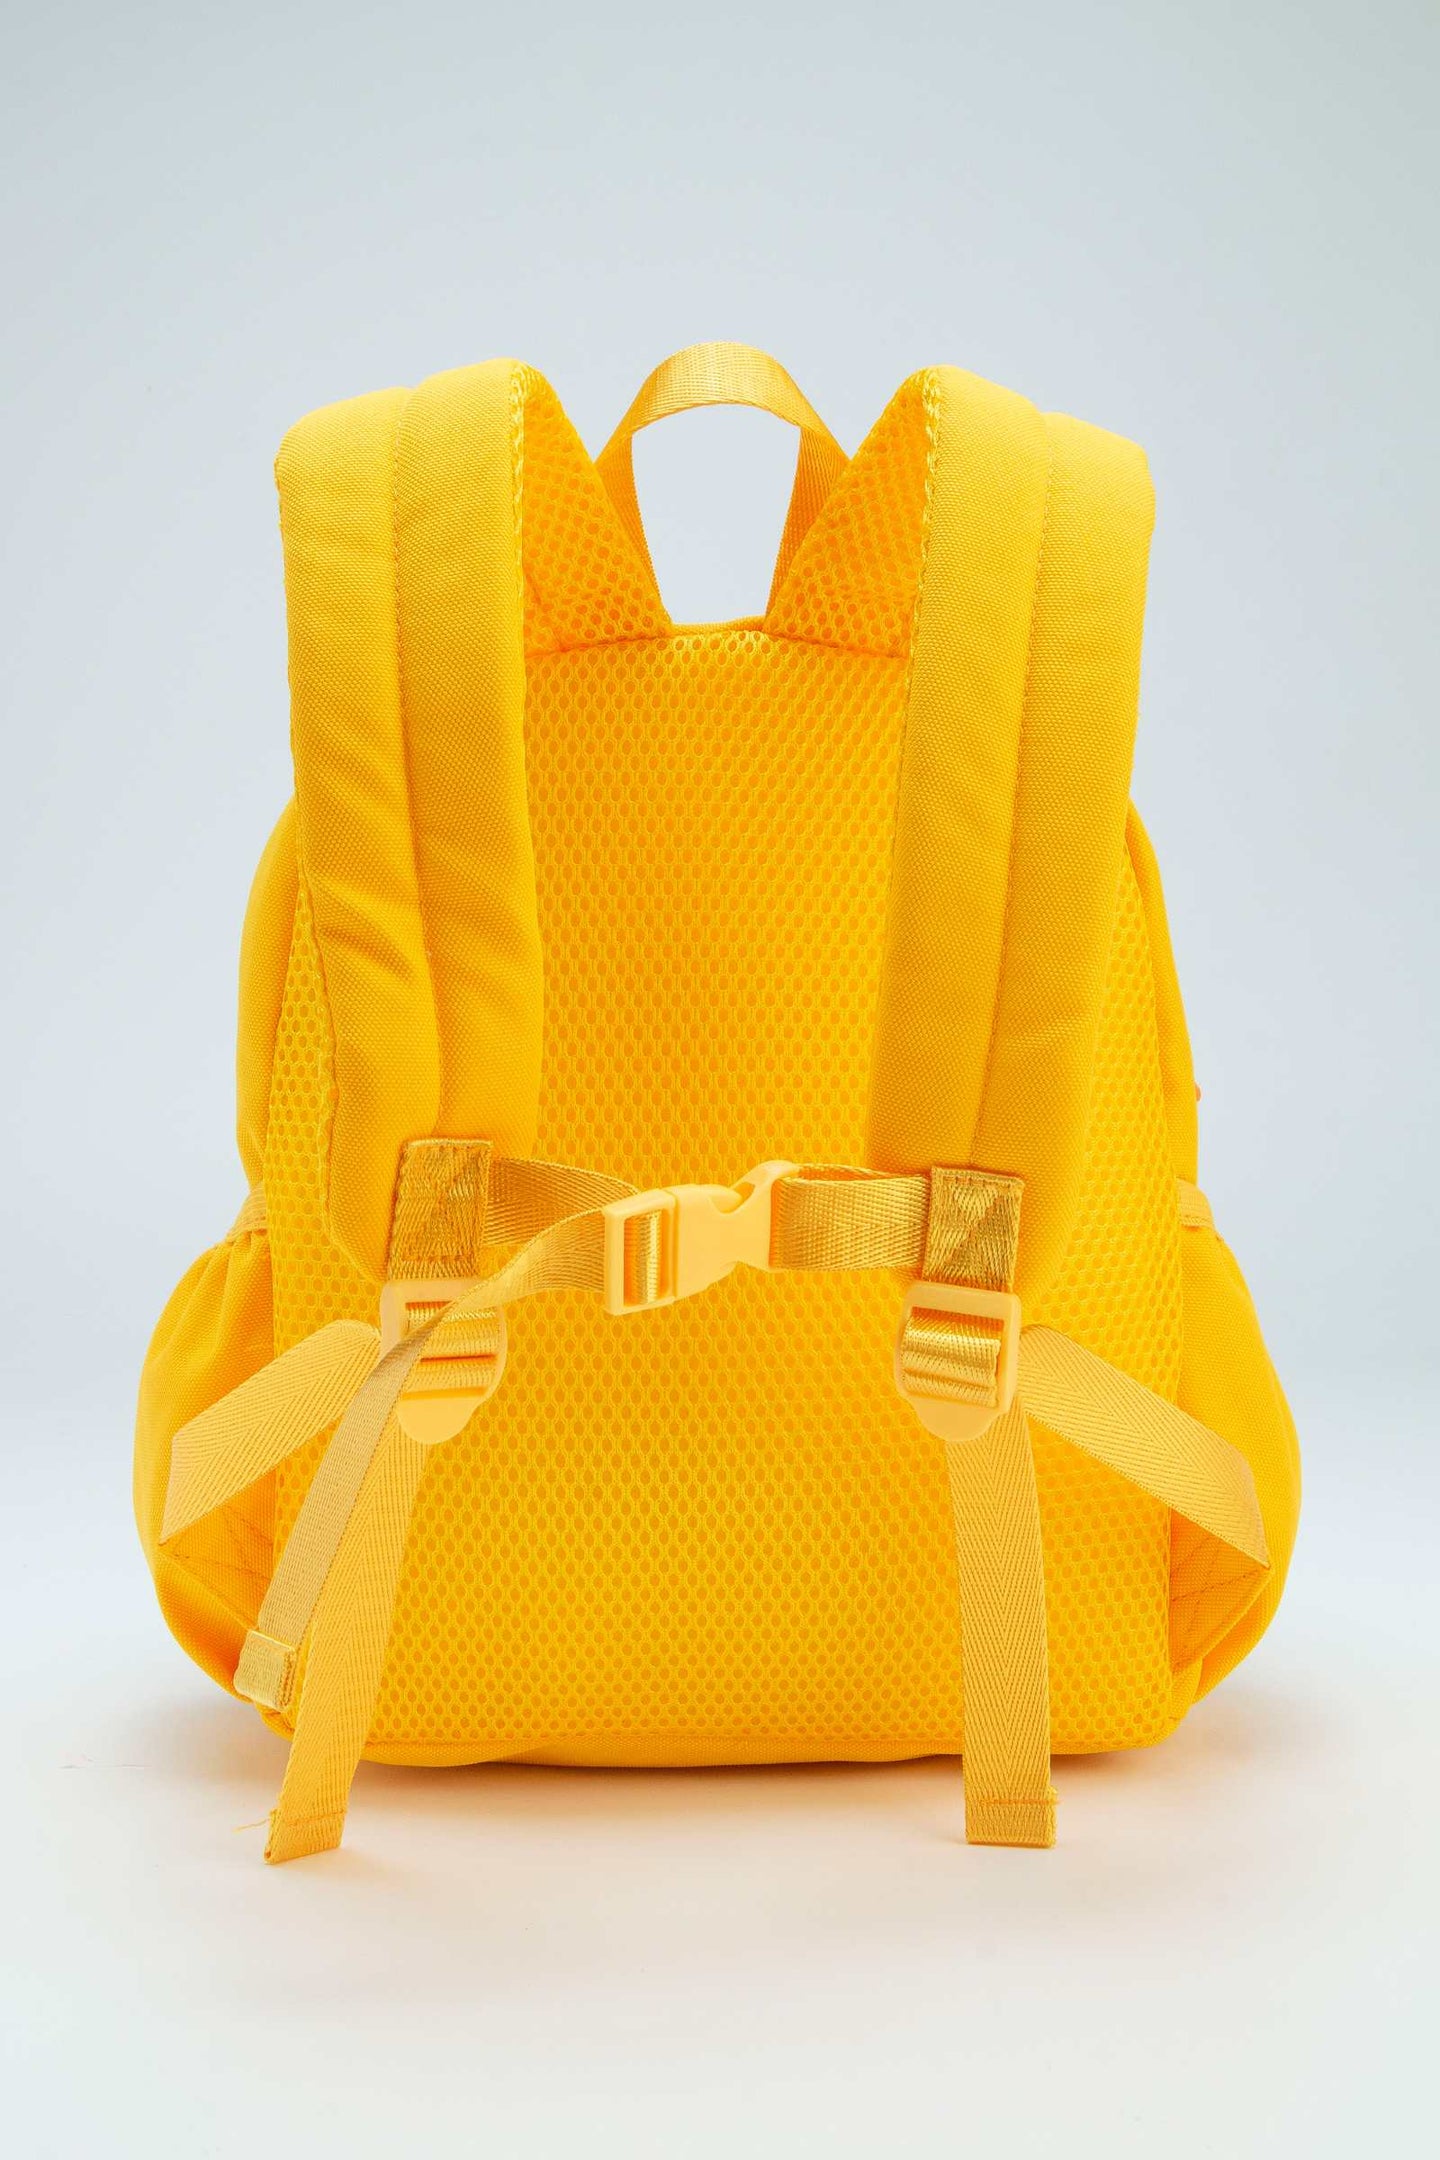 B.Duck Mini Cute 3D Duckbill Shape Backpack Yellow Child